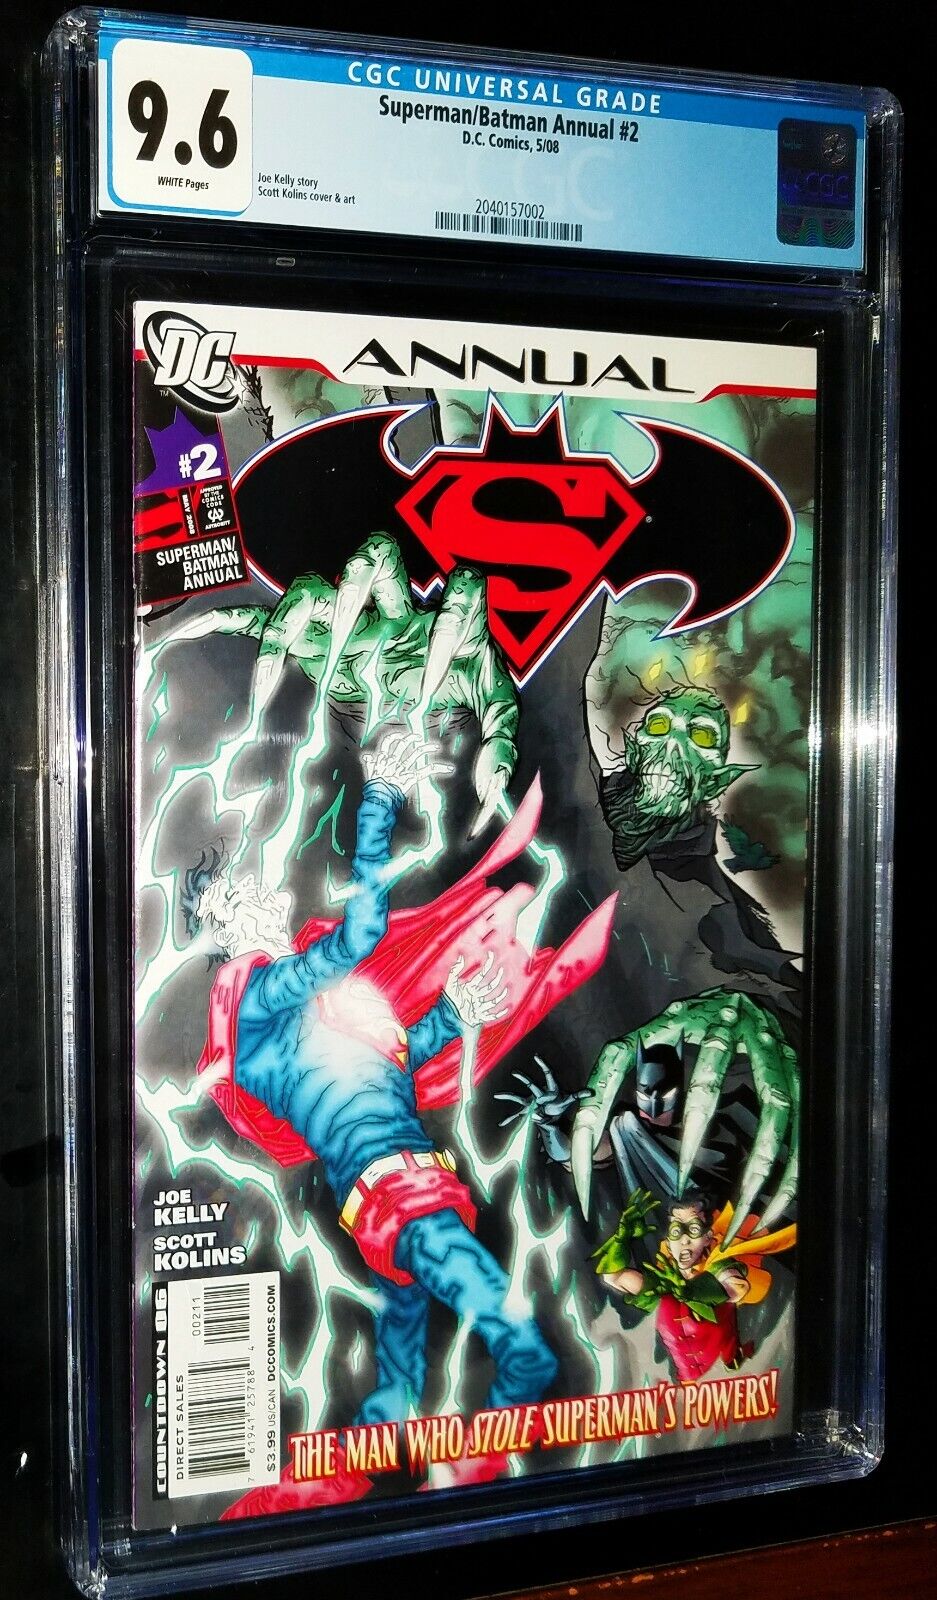 CGC SUPERMAN / BATMAN ANNUAL #2 2008 DC Comics CGC 9.6 NM+ White Pages 06261